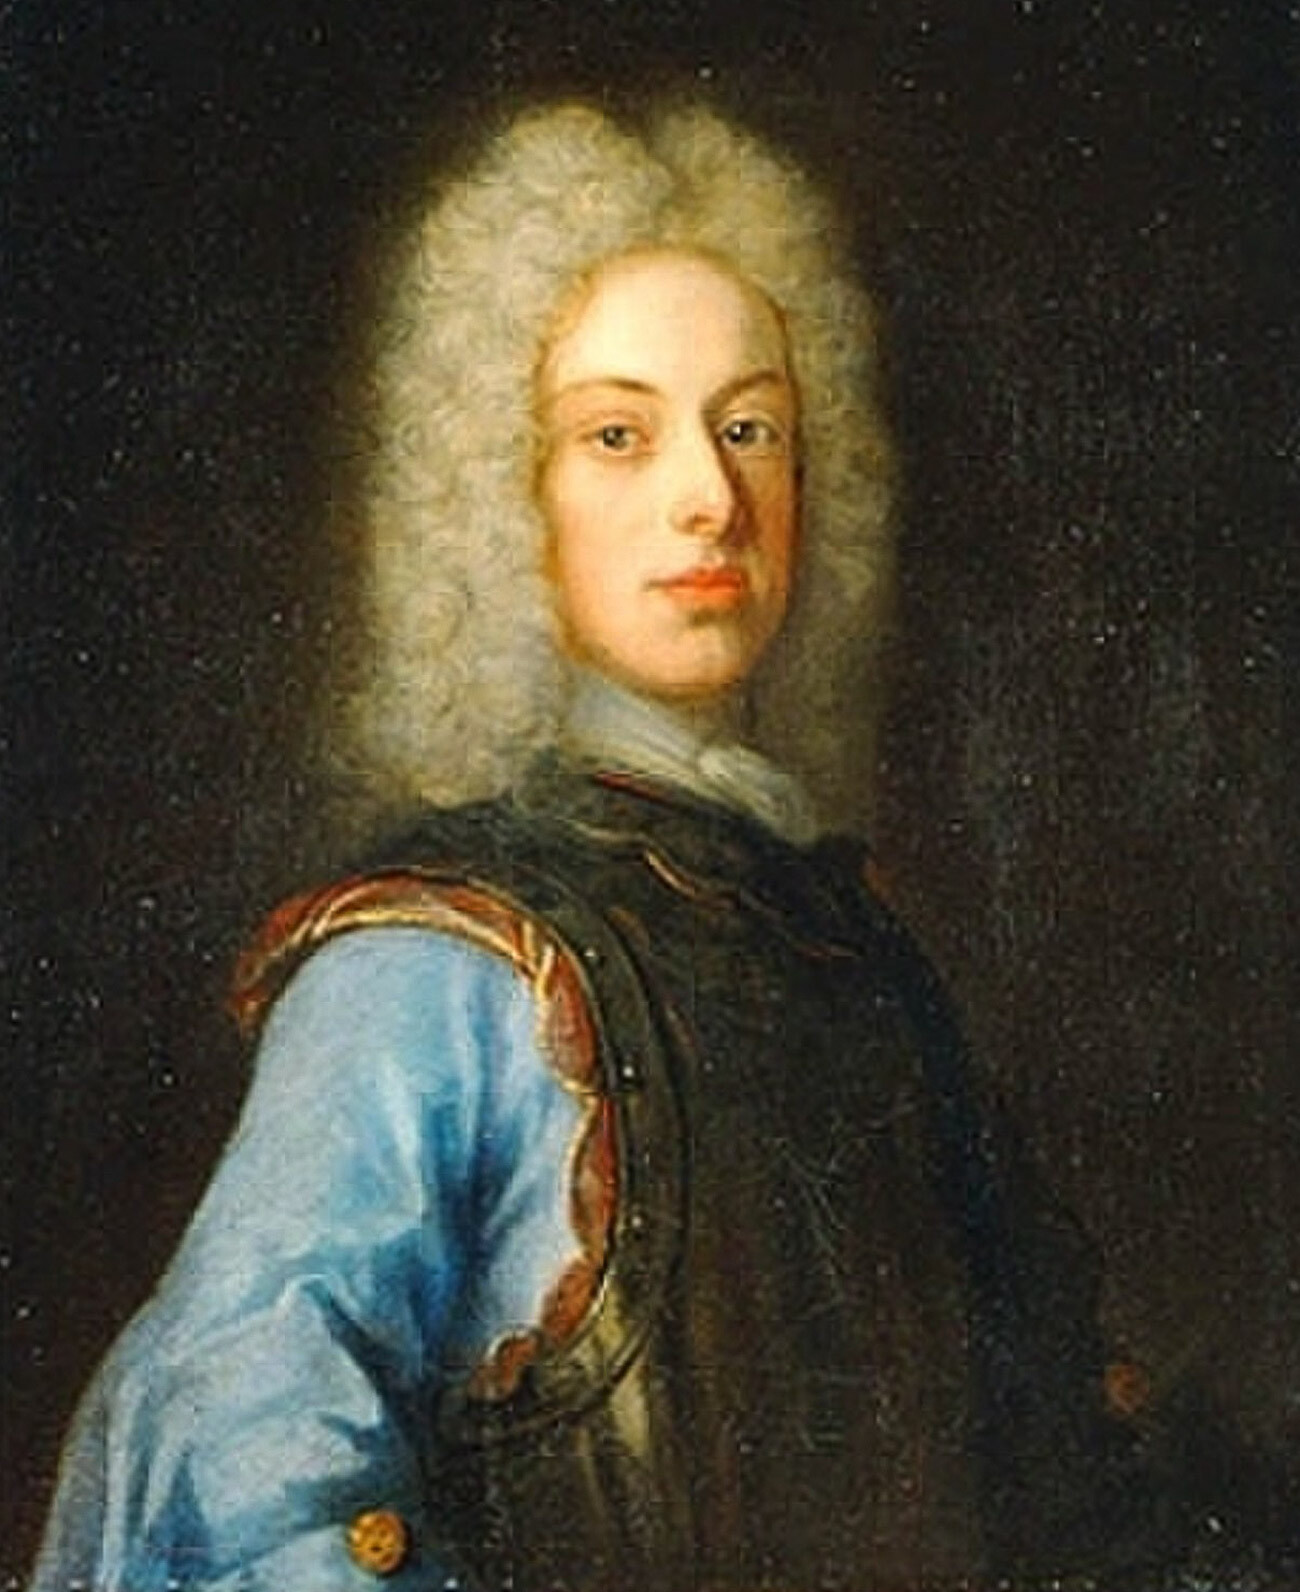 Принц Карл Фридрих од Шведске.